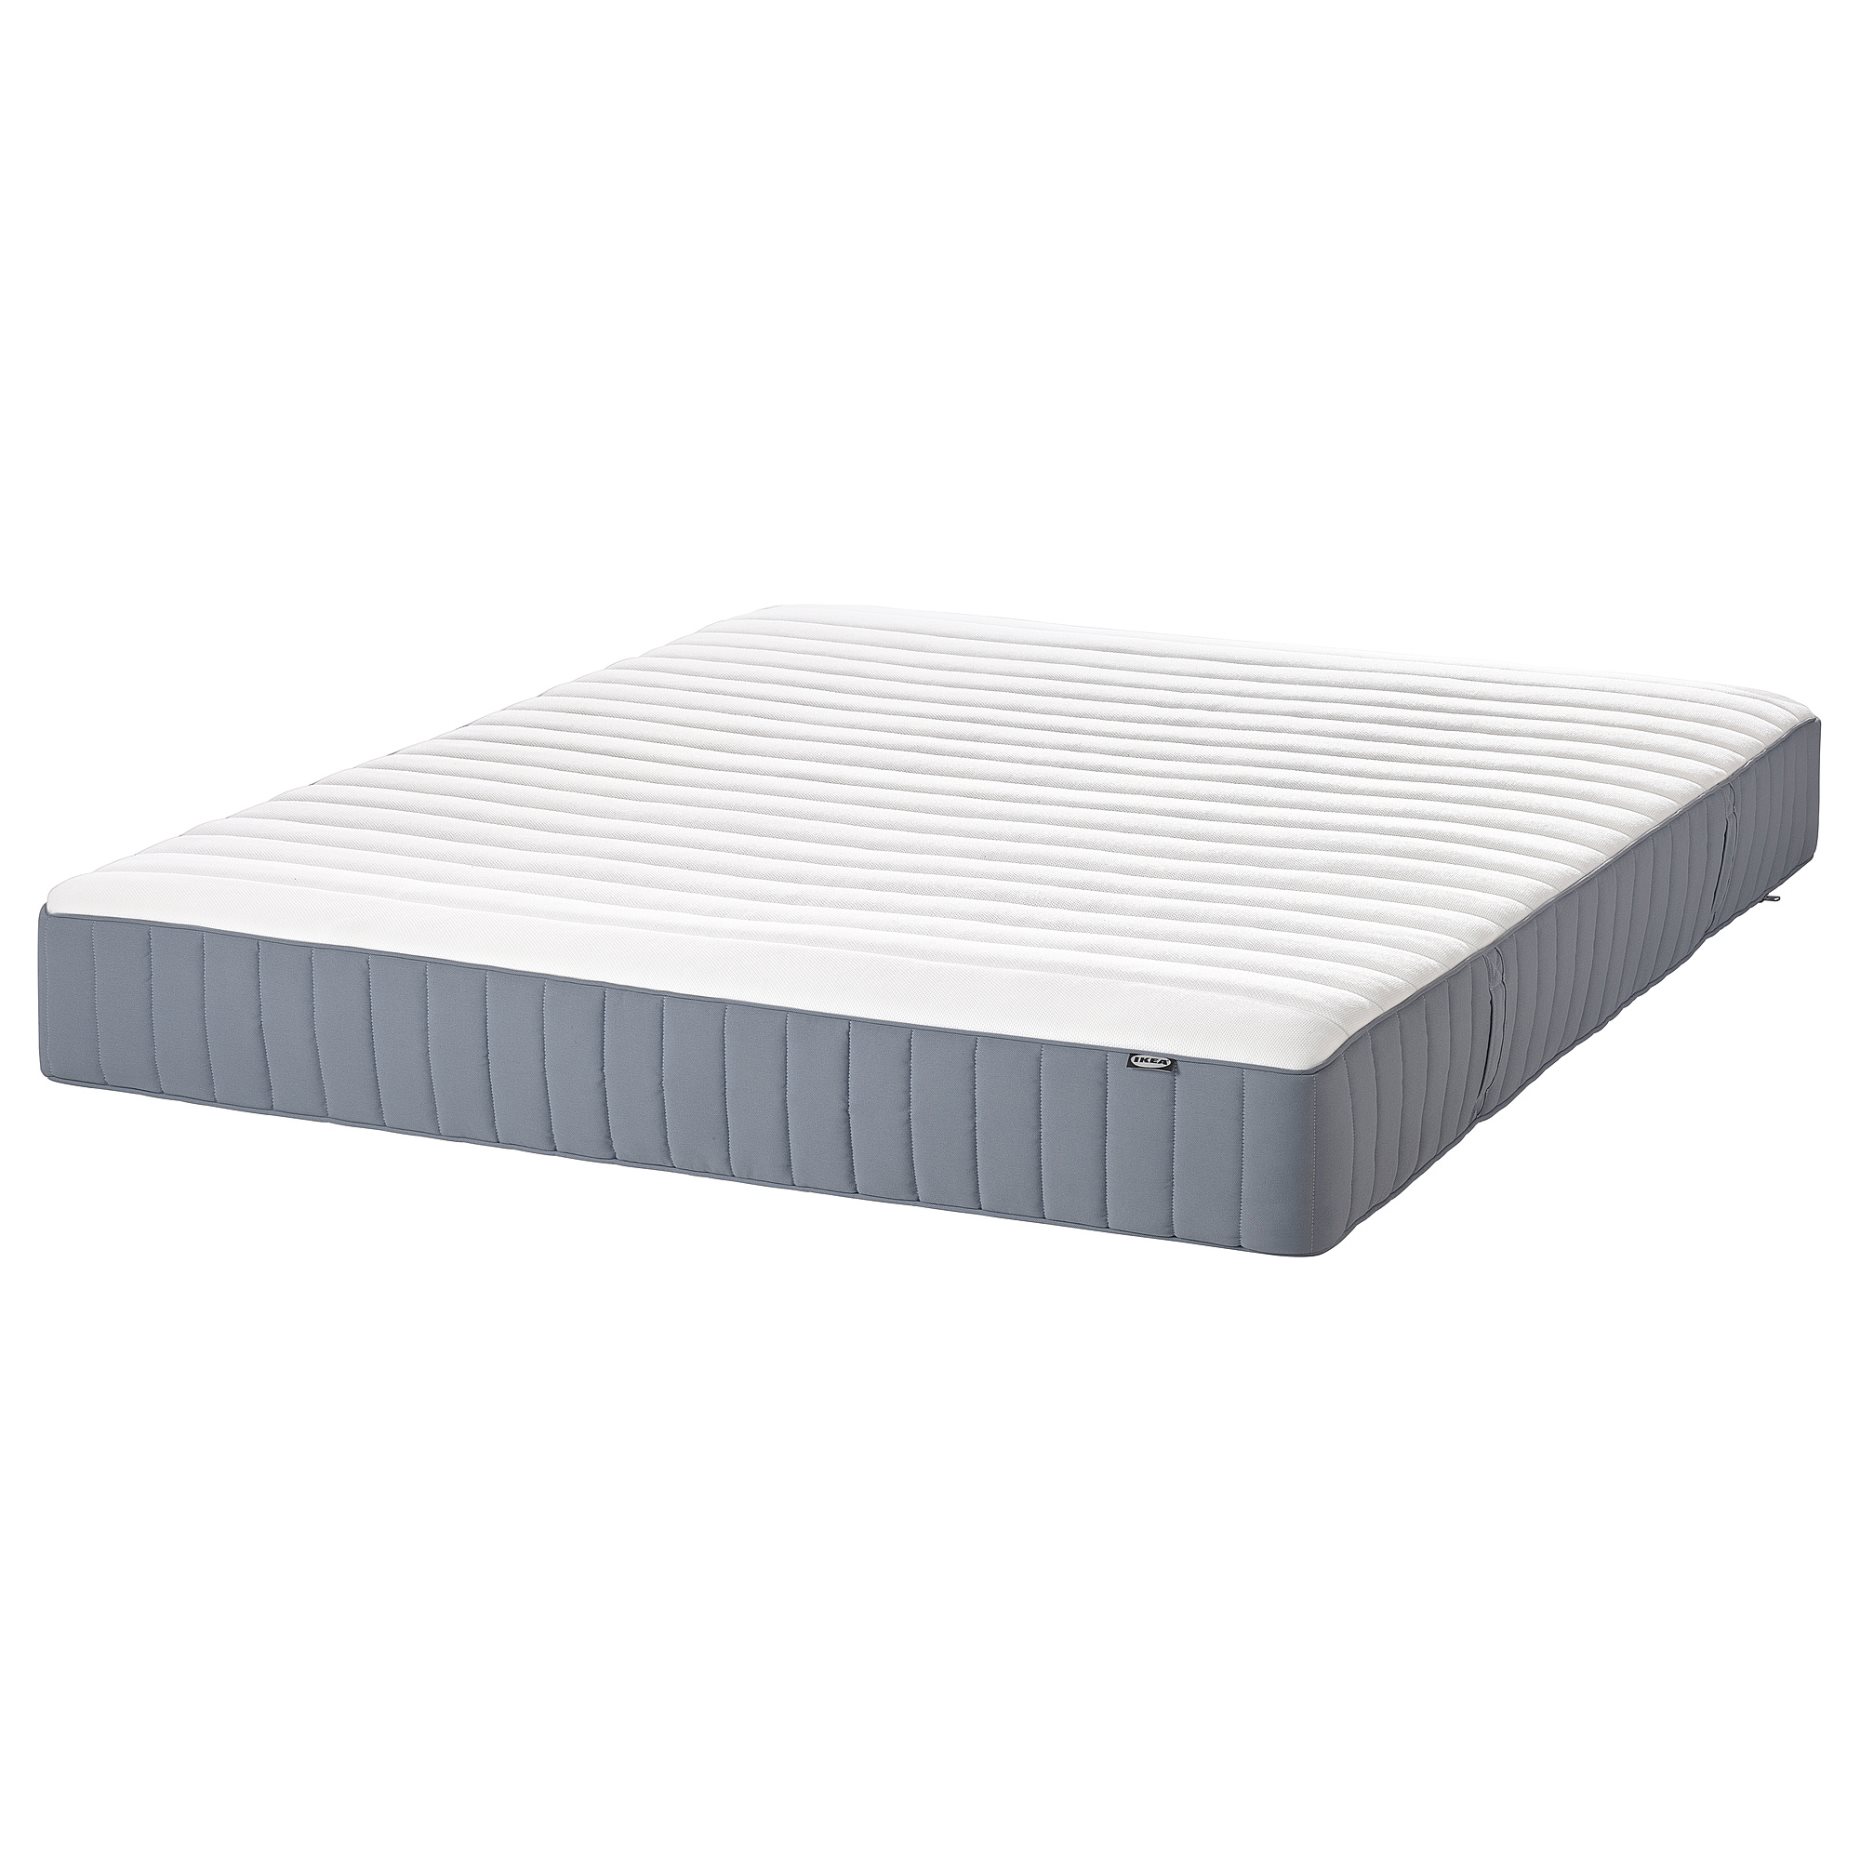 VALEVÅG, pocket sprung mattress/firm, 140x200 cm, 004.506.58